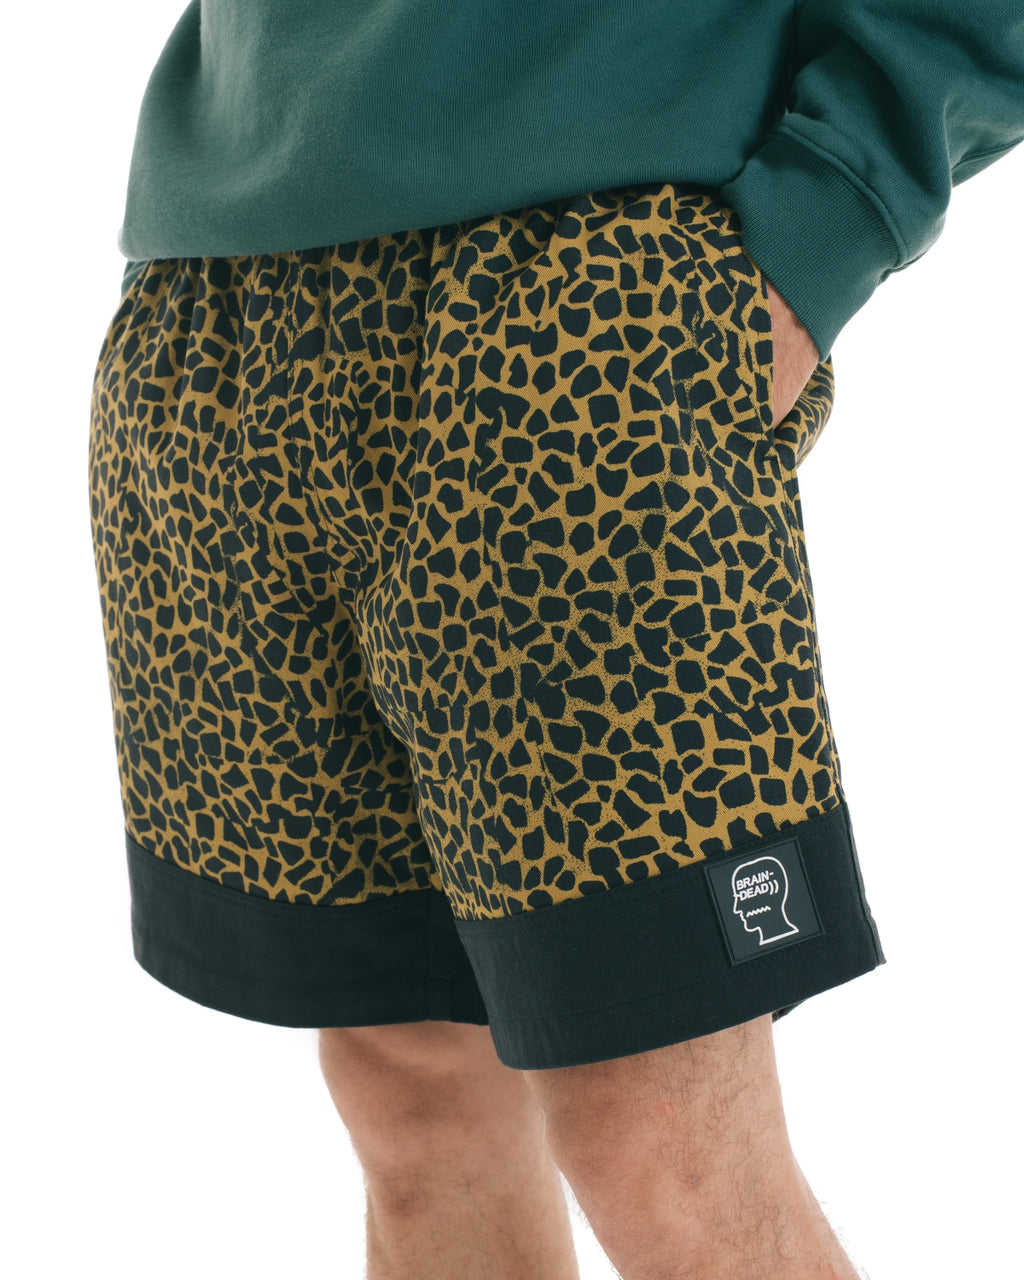 Paneled Leopard Dress Short - Leopard / Black 5